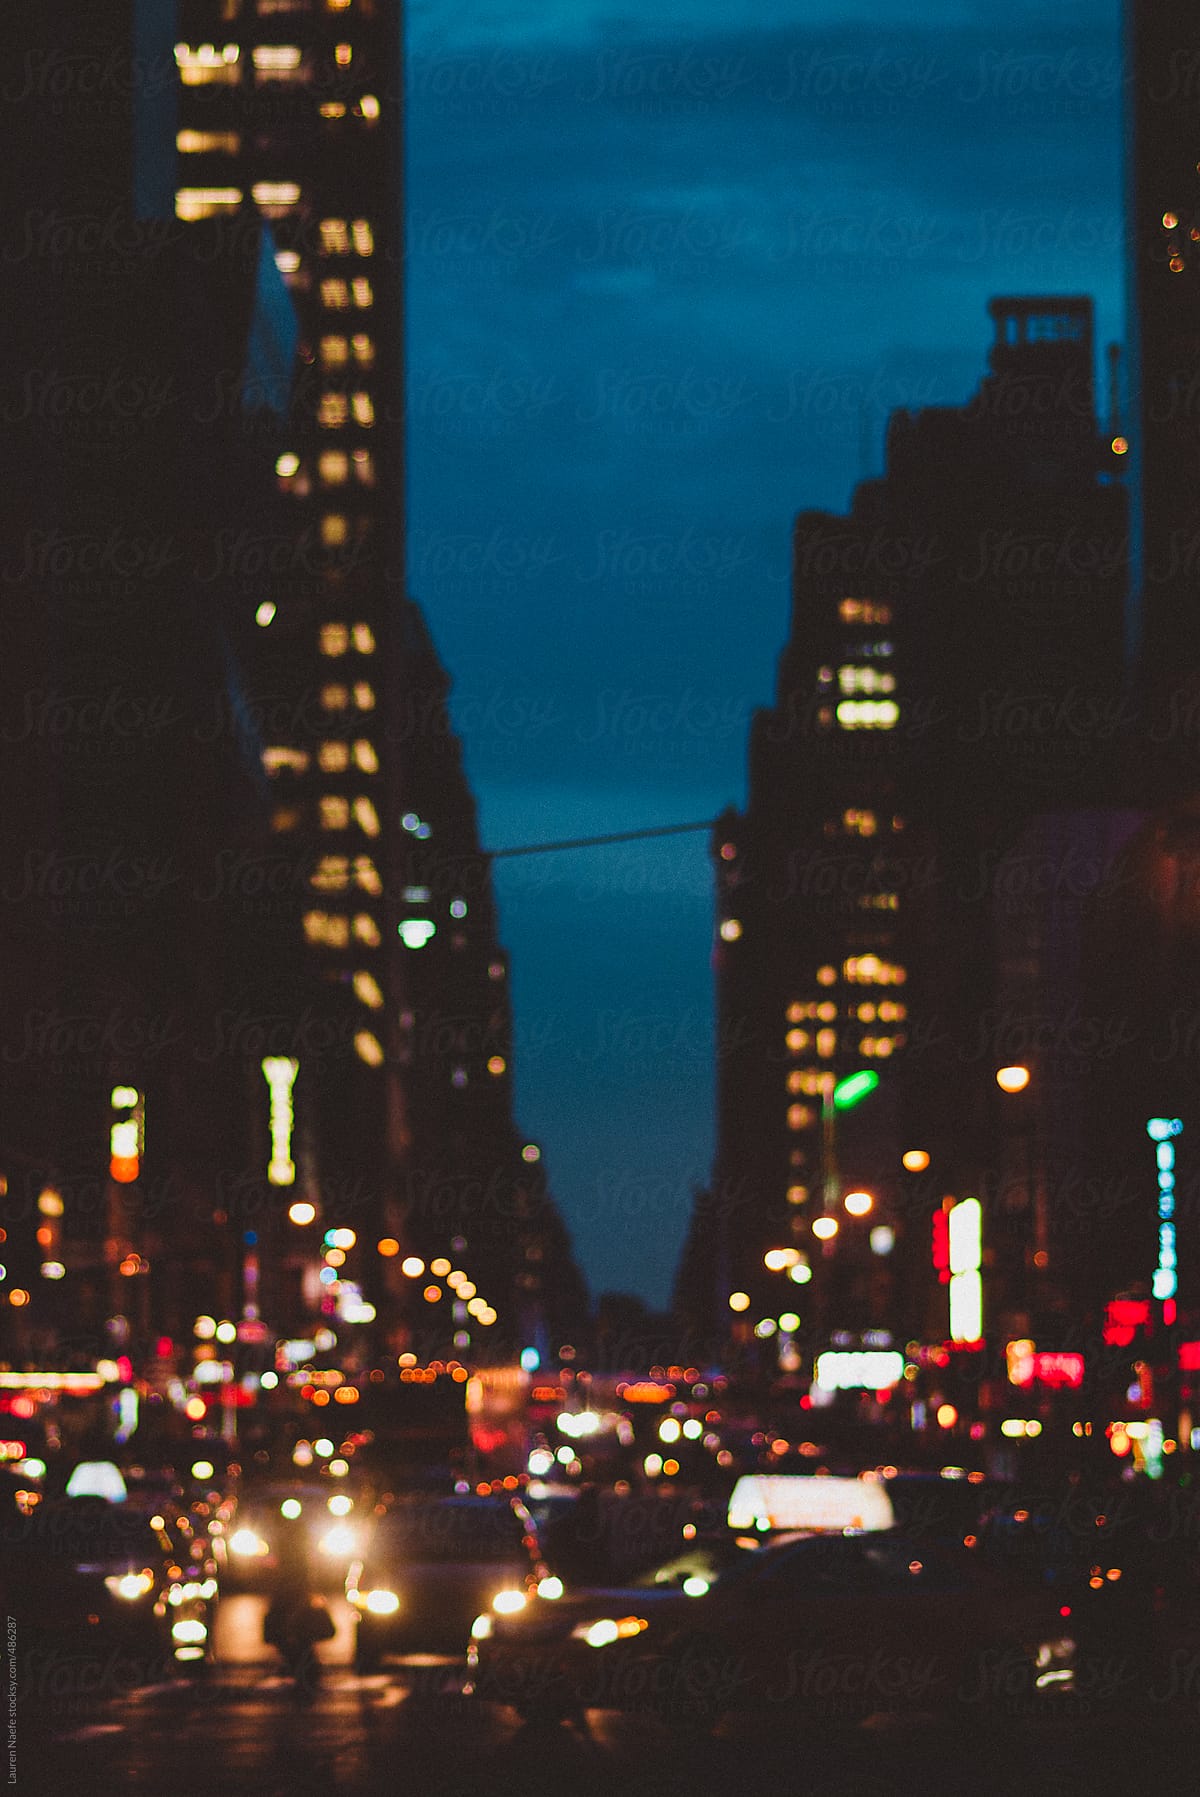 New York City street at night